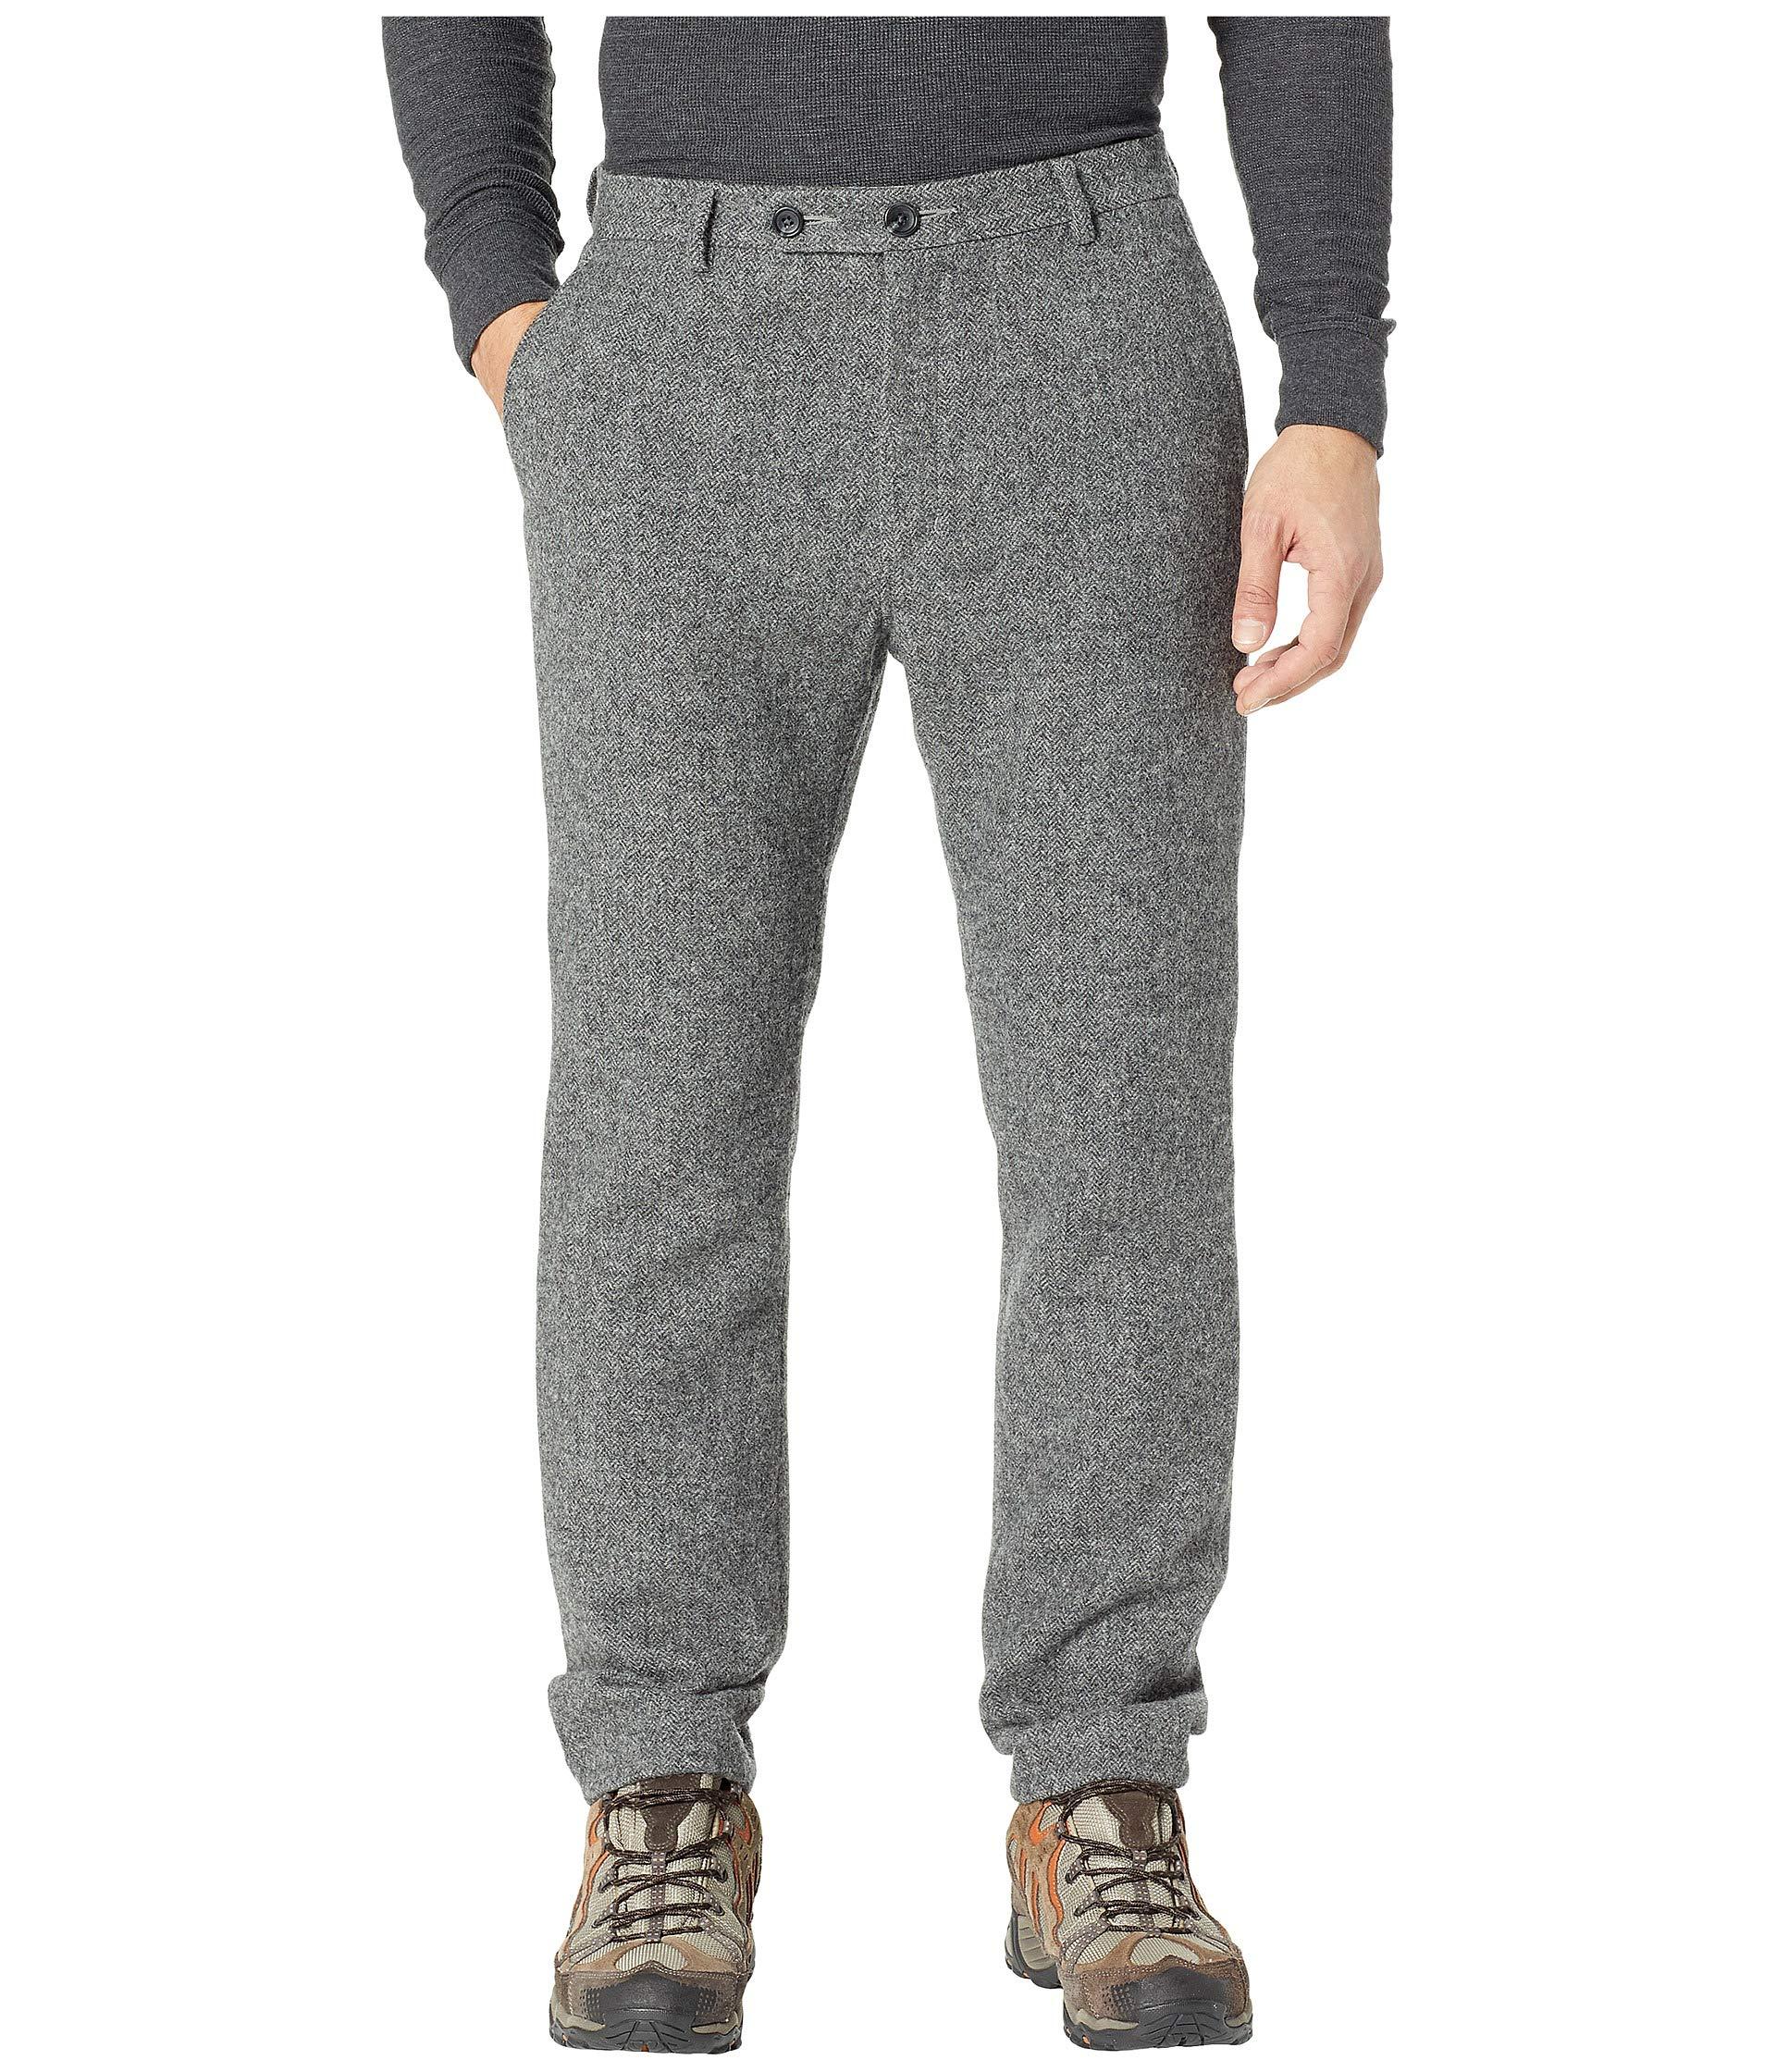 Snow Peak Camping Wool Pants in Grey (Gray) for Men - Lyst